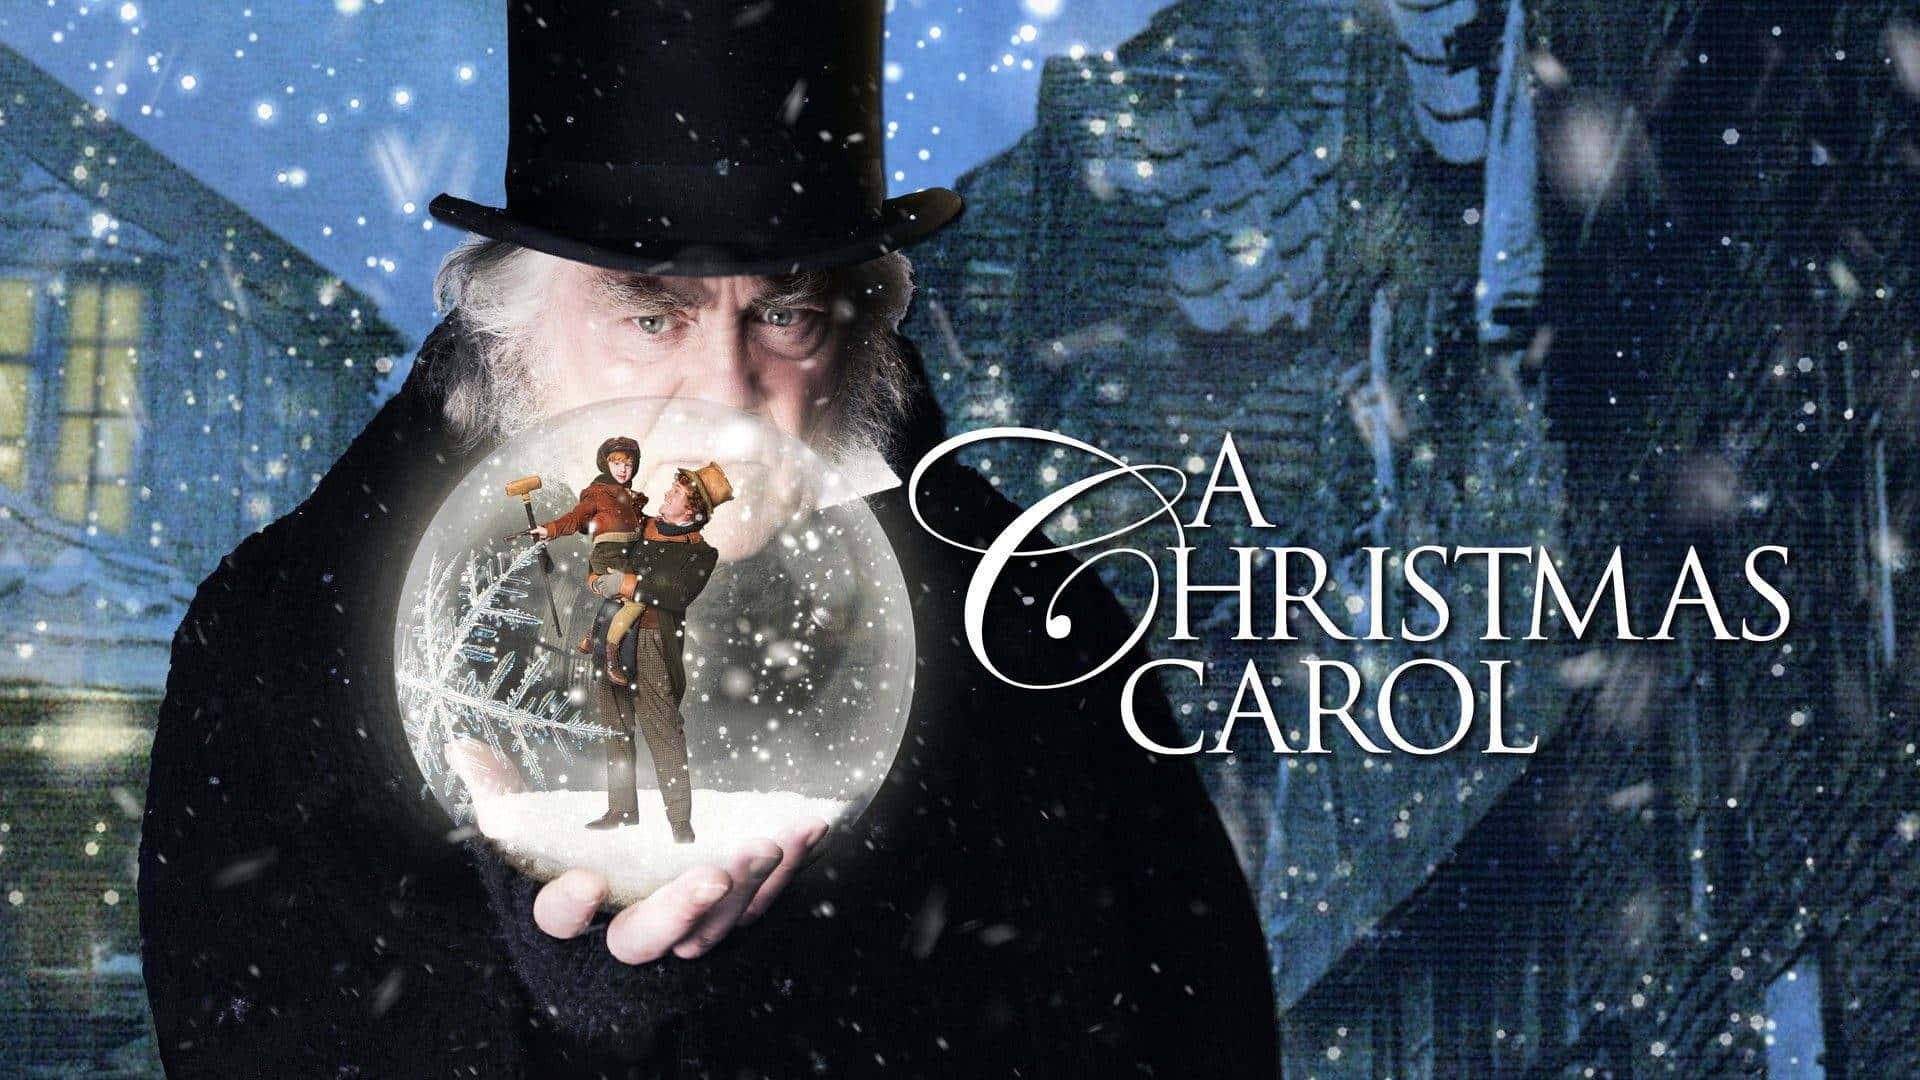 A Christmas Carol With A Man Holding A Snow Globe